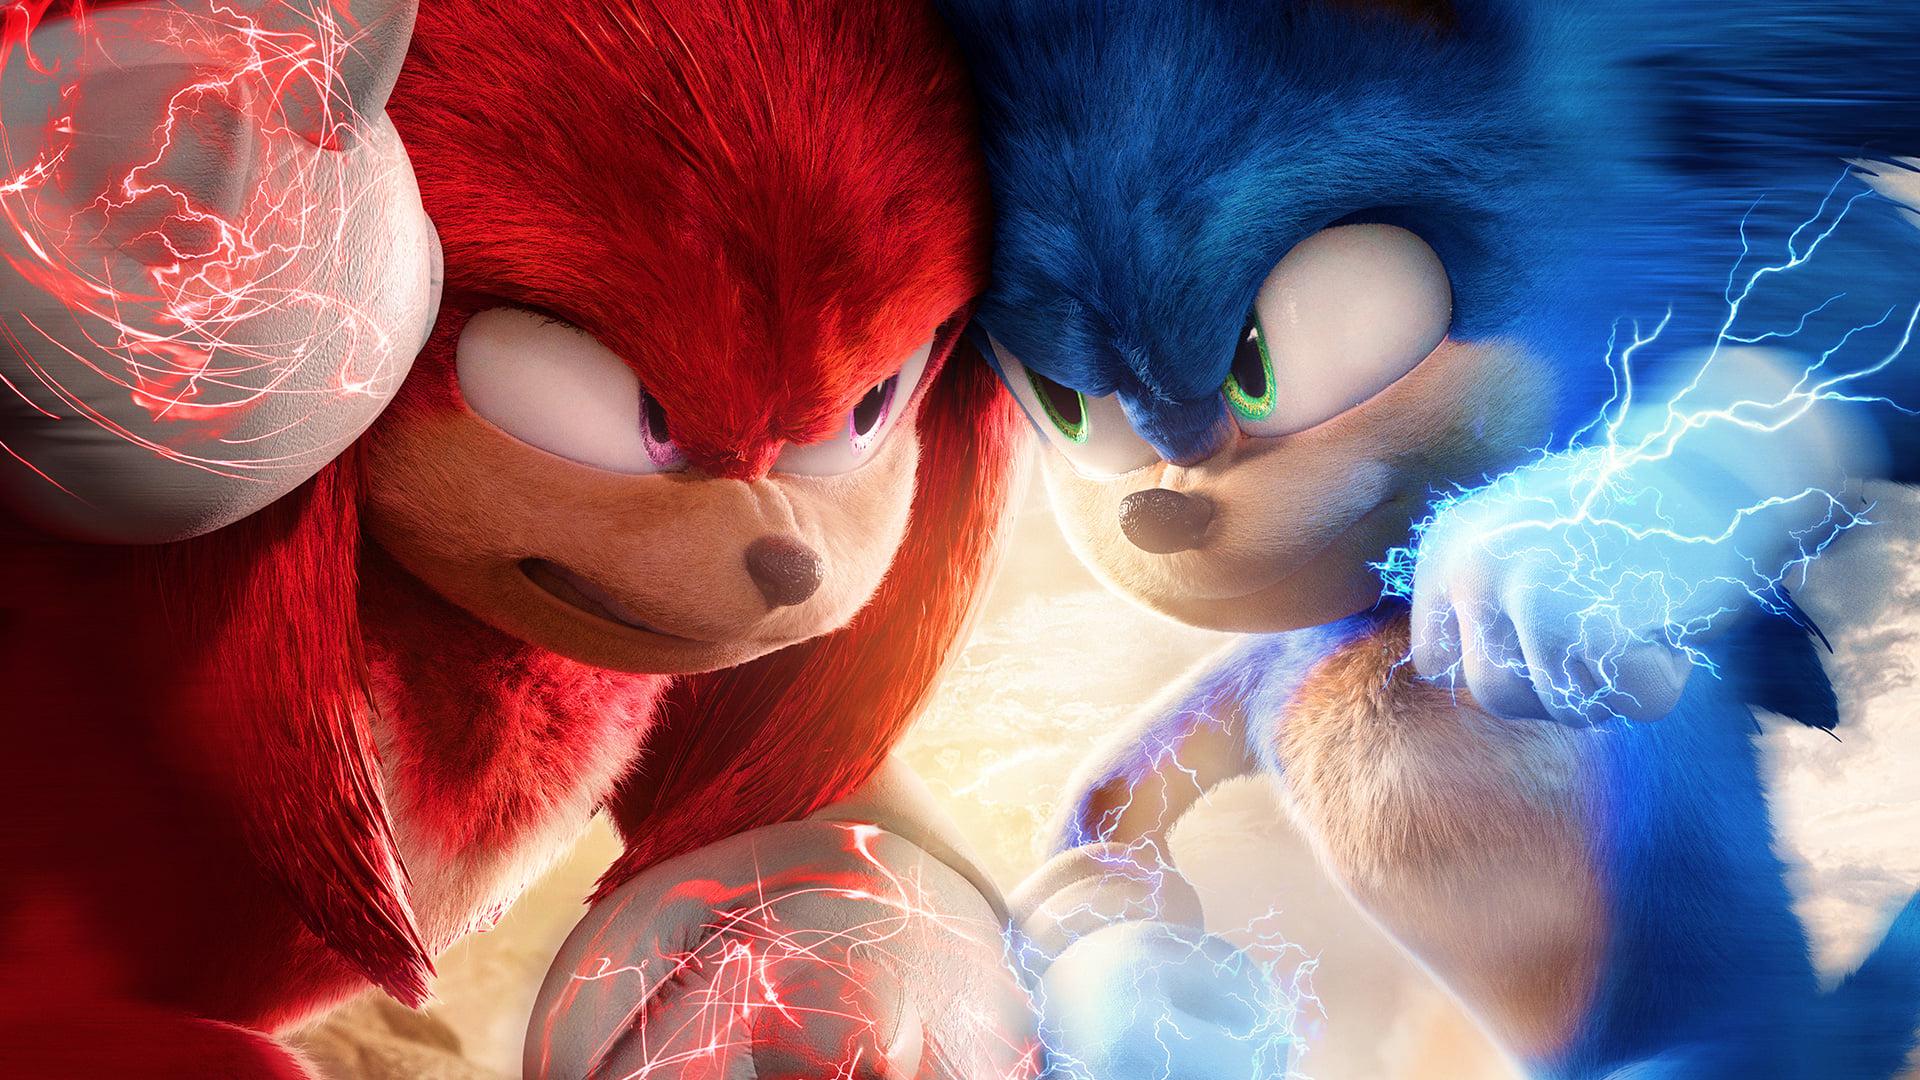 More information about "Top 10: de meest gedownloade films - 09/05/2022 - Sonic the Hedgehog 2 Nr. 1"